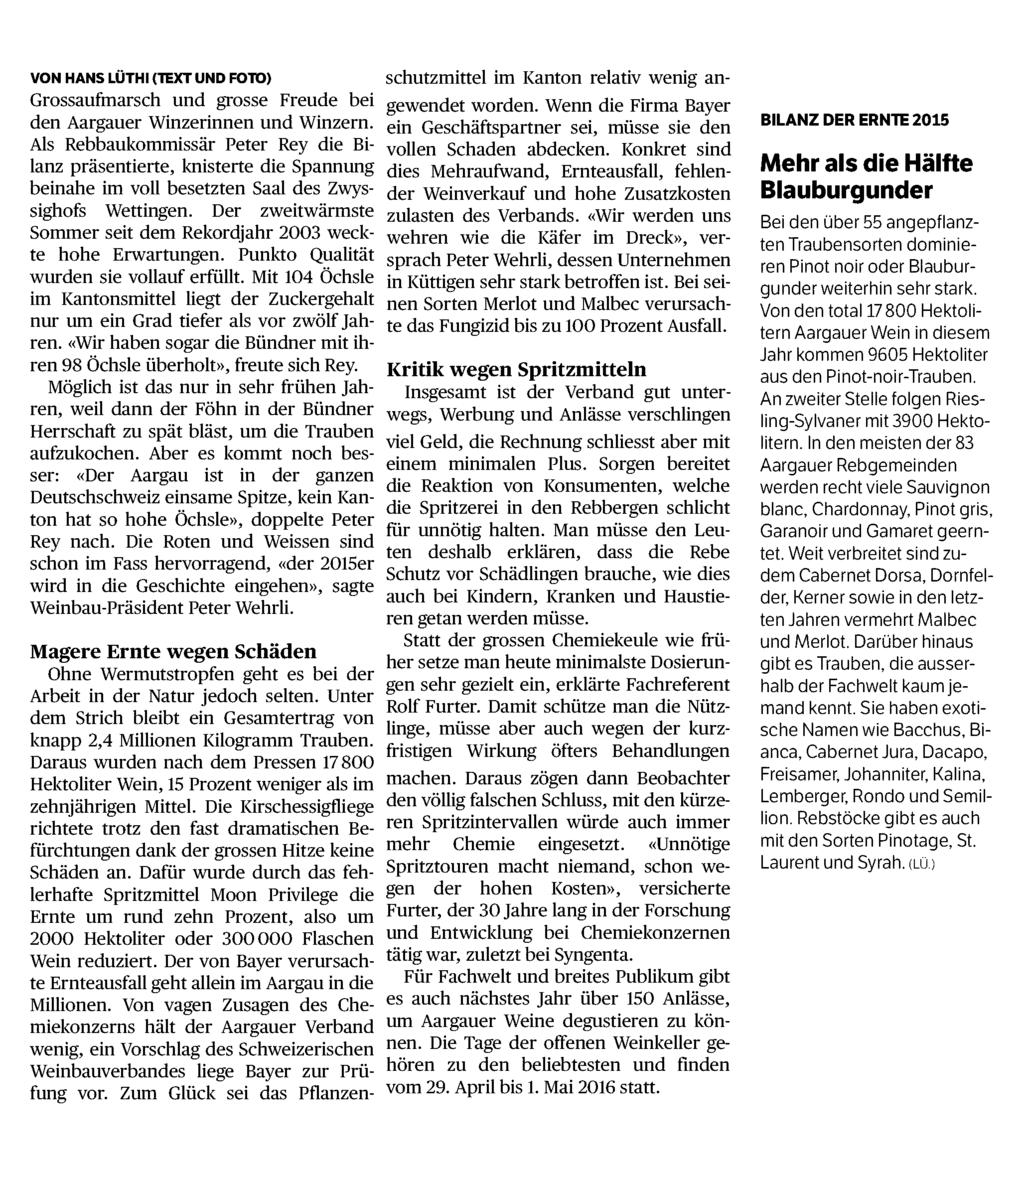 Aargauer Zeitung 5070 Frick 058/ 200 52 20 www.aargauerzeitung.